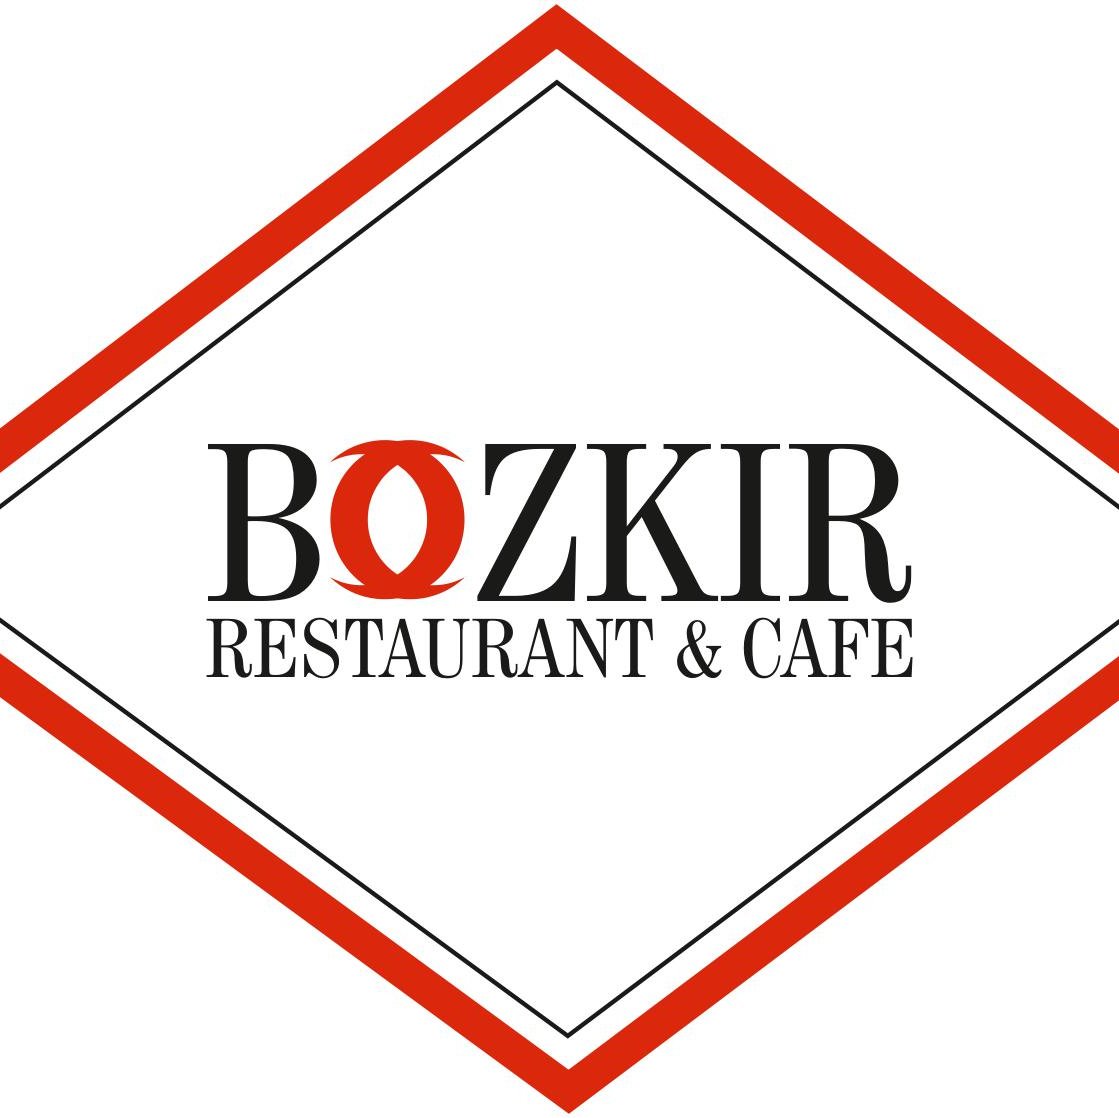 Facebook:BozkirRestaurantCafe    İnstagram:cafebozkirrestaurant

#restaurant #cafe #nargile #hookah #kahvaltı #brunch #kahve #coffee #family #event